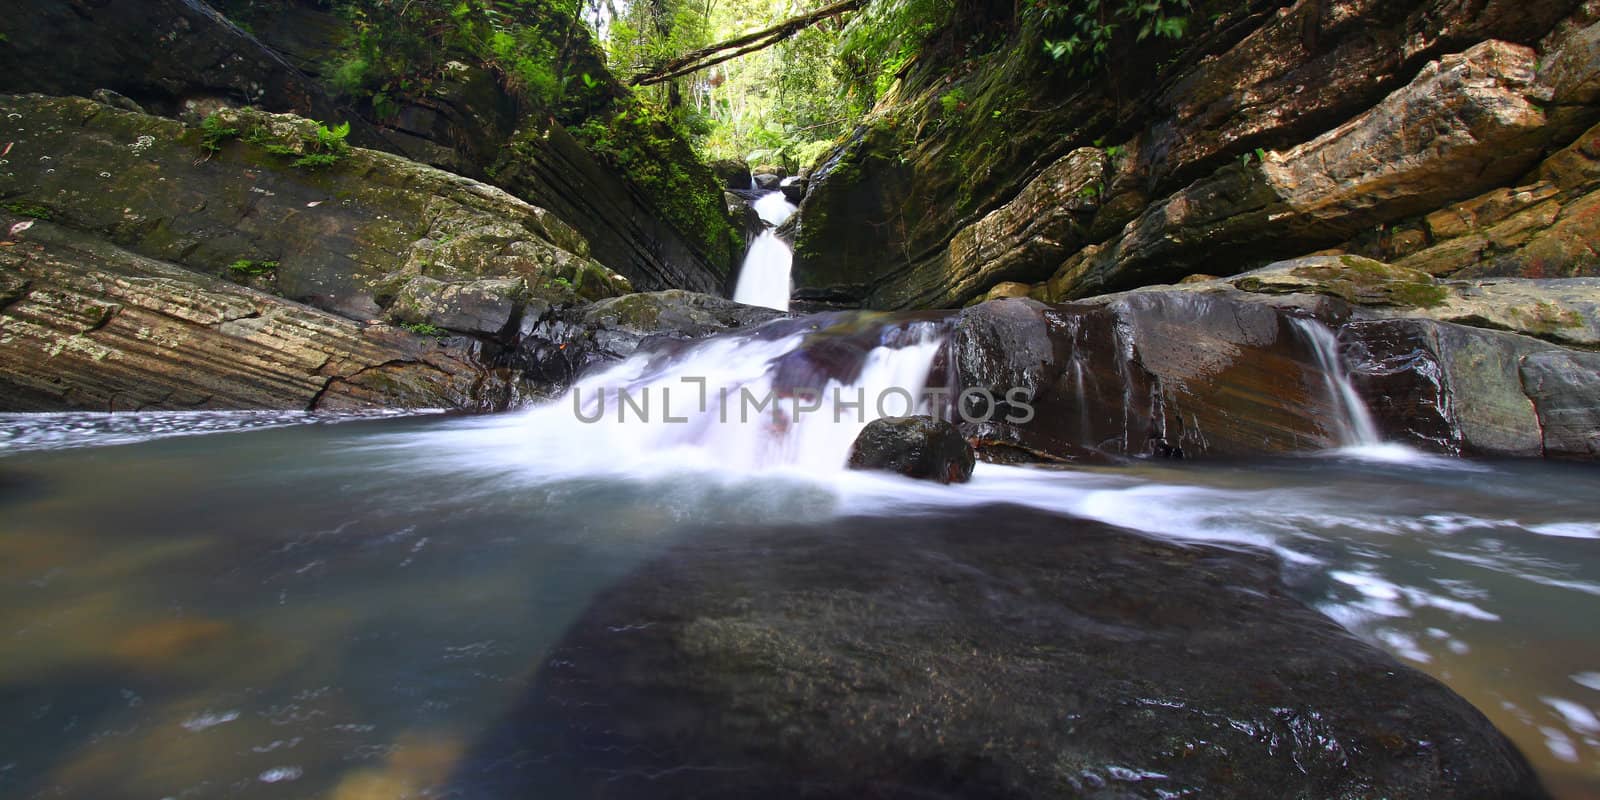 A tranquil rainforest cascade above La Mina Falls in Puerto Rico.